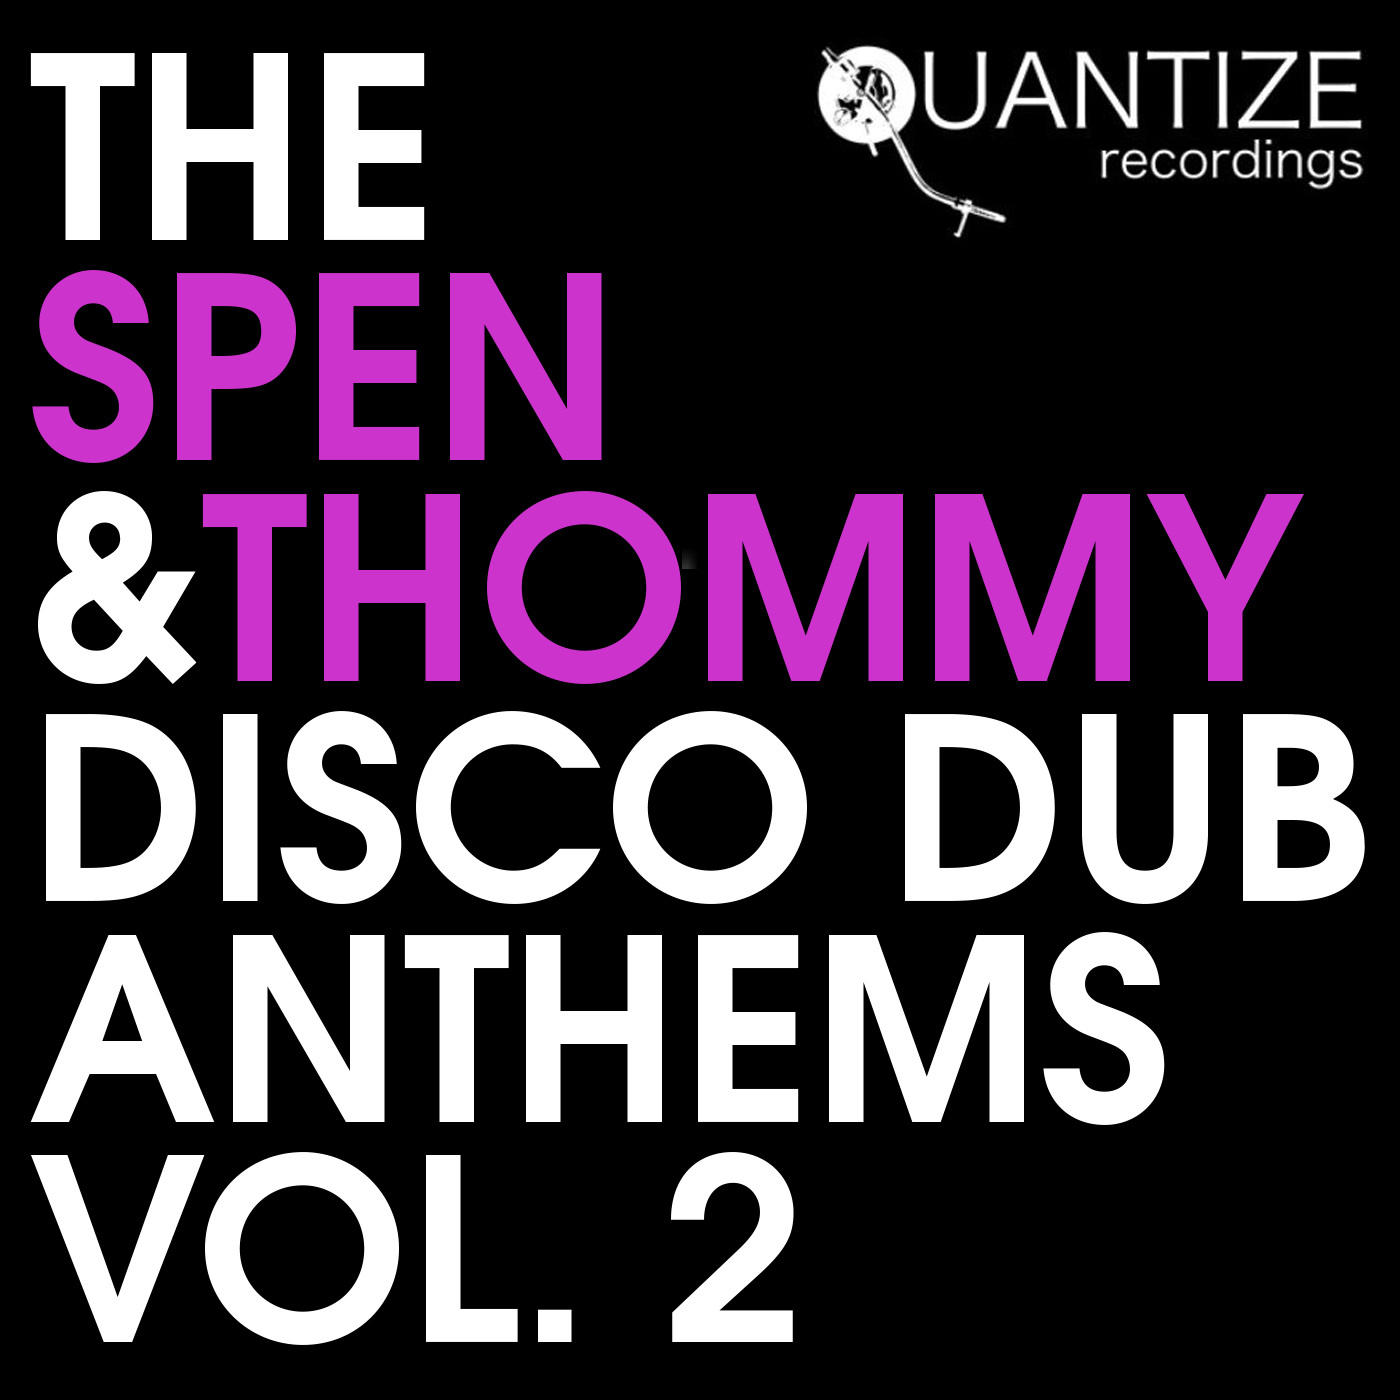 VA - The Spen & Thommy Disco Dub Anthems Vol.2 / Quantize Recordings